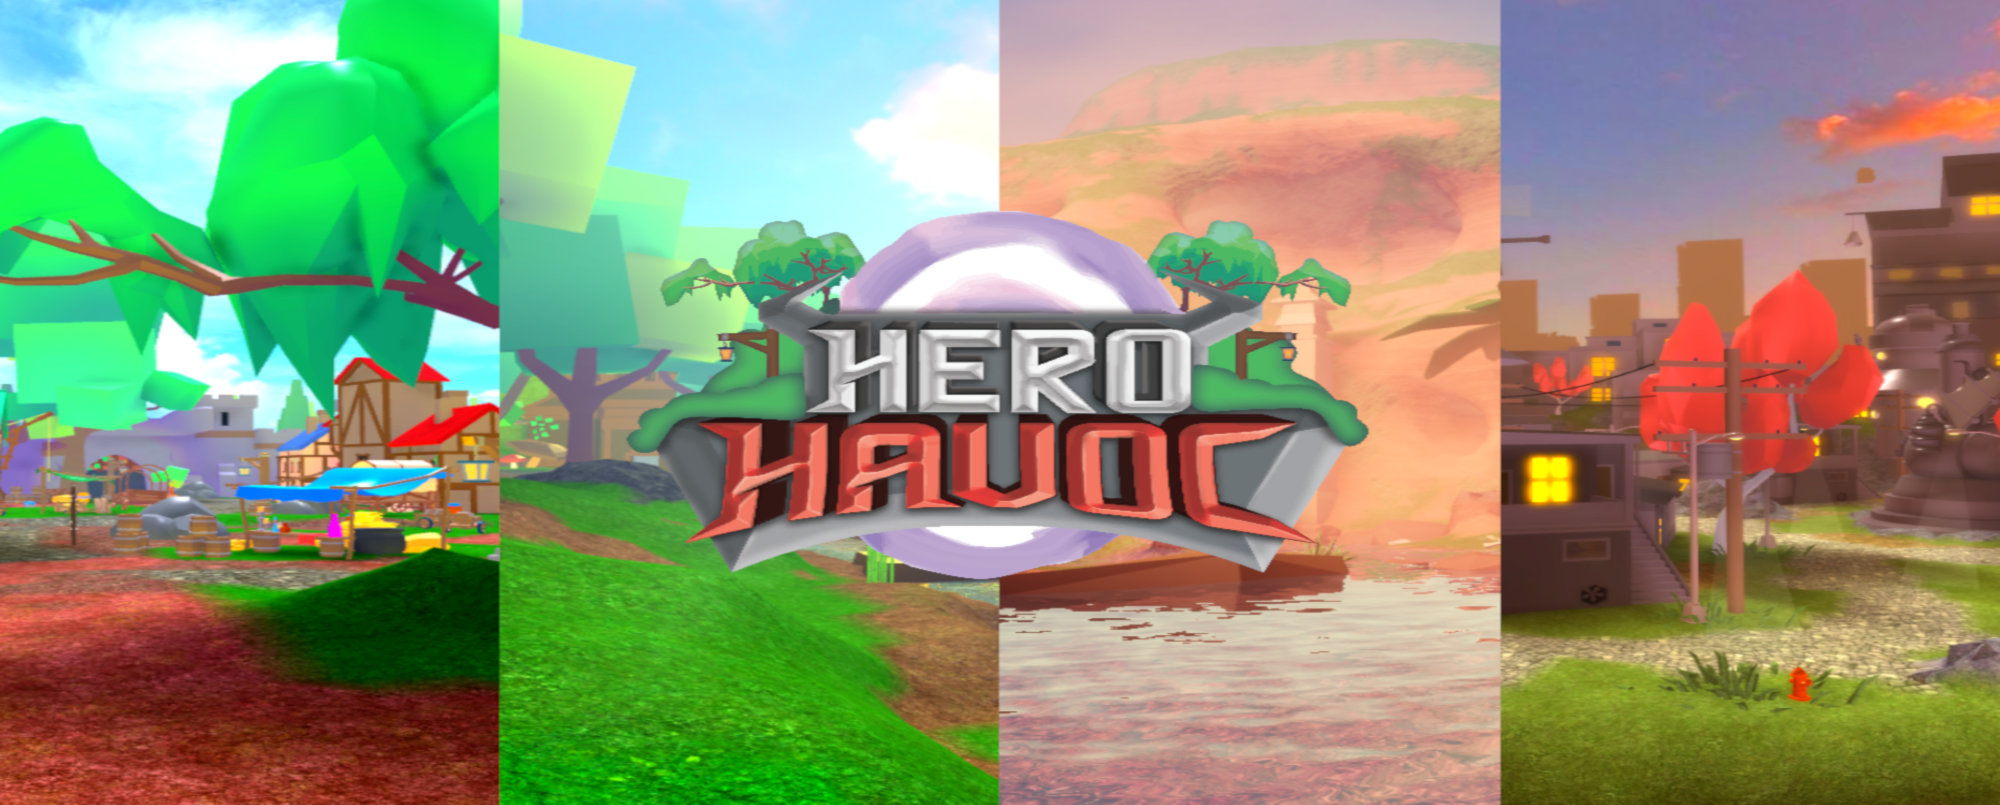 Update Hero Havoc Codes Wiki